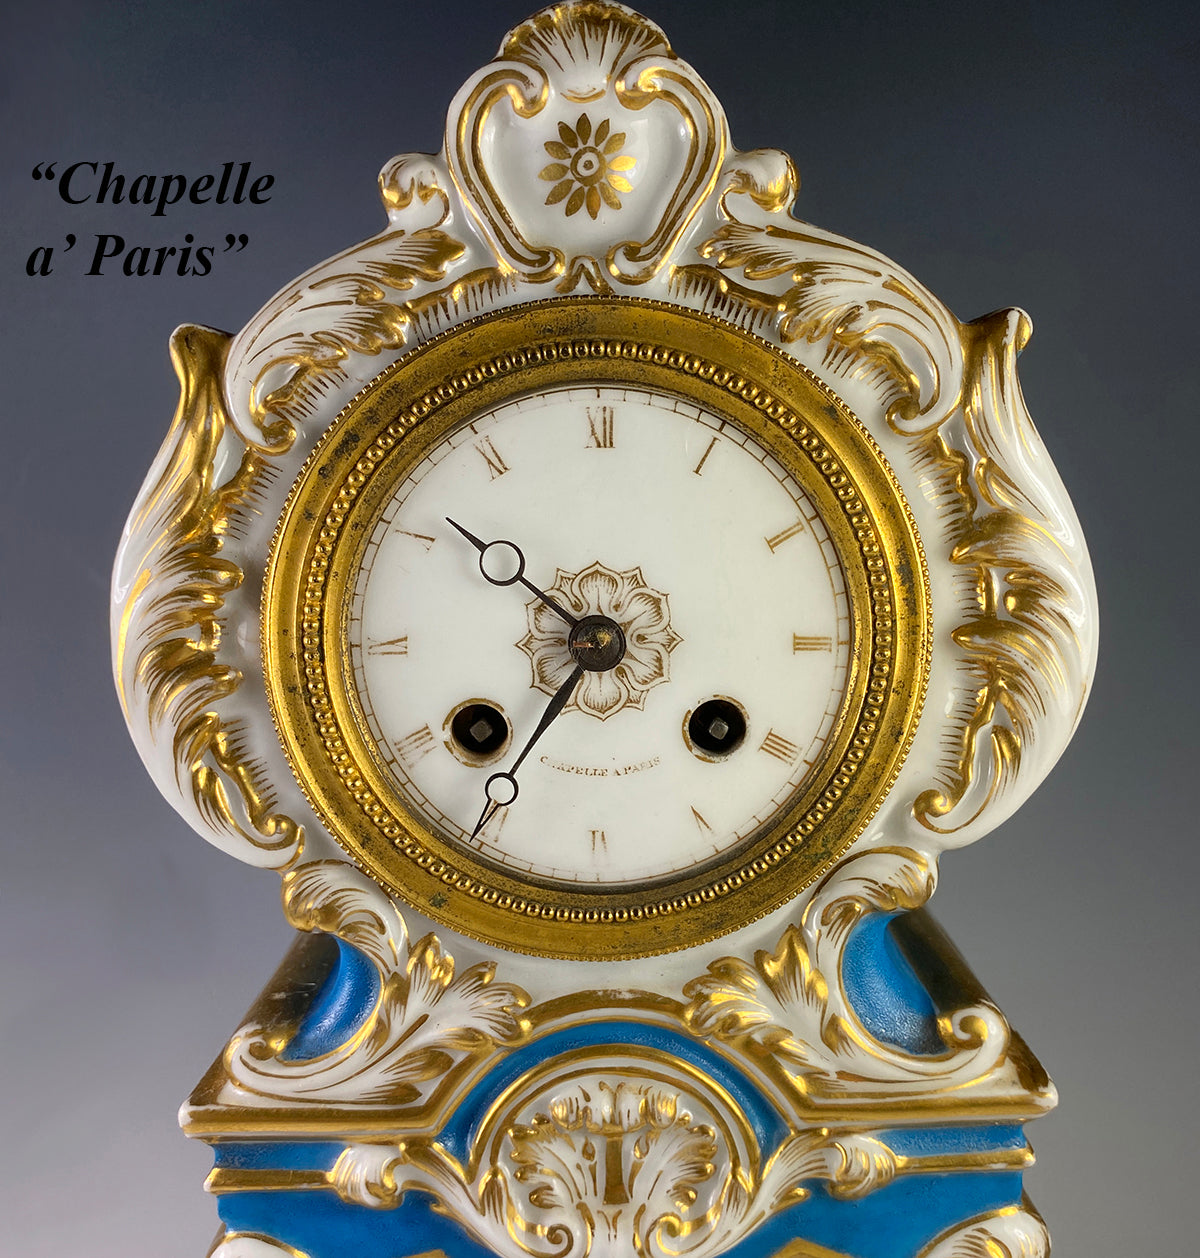 Superb Antique French Old Paris Porcelain Mantel Clock and Plinth, 19th c. After Louis XVI Style